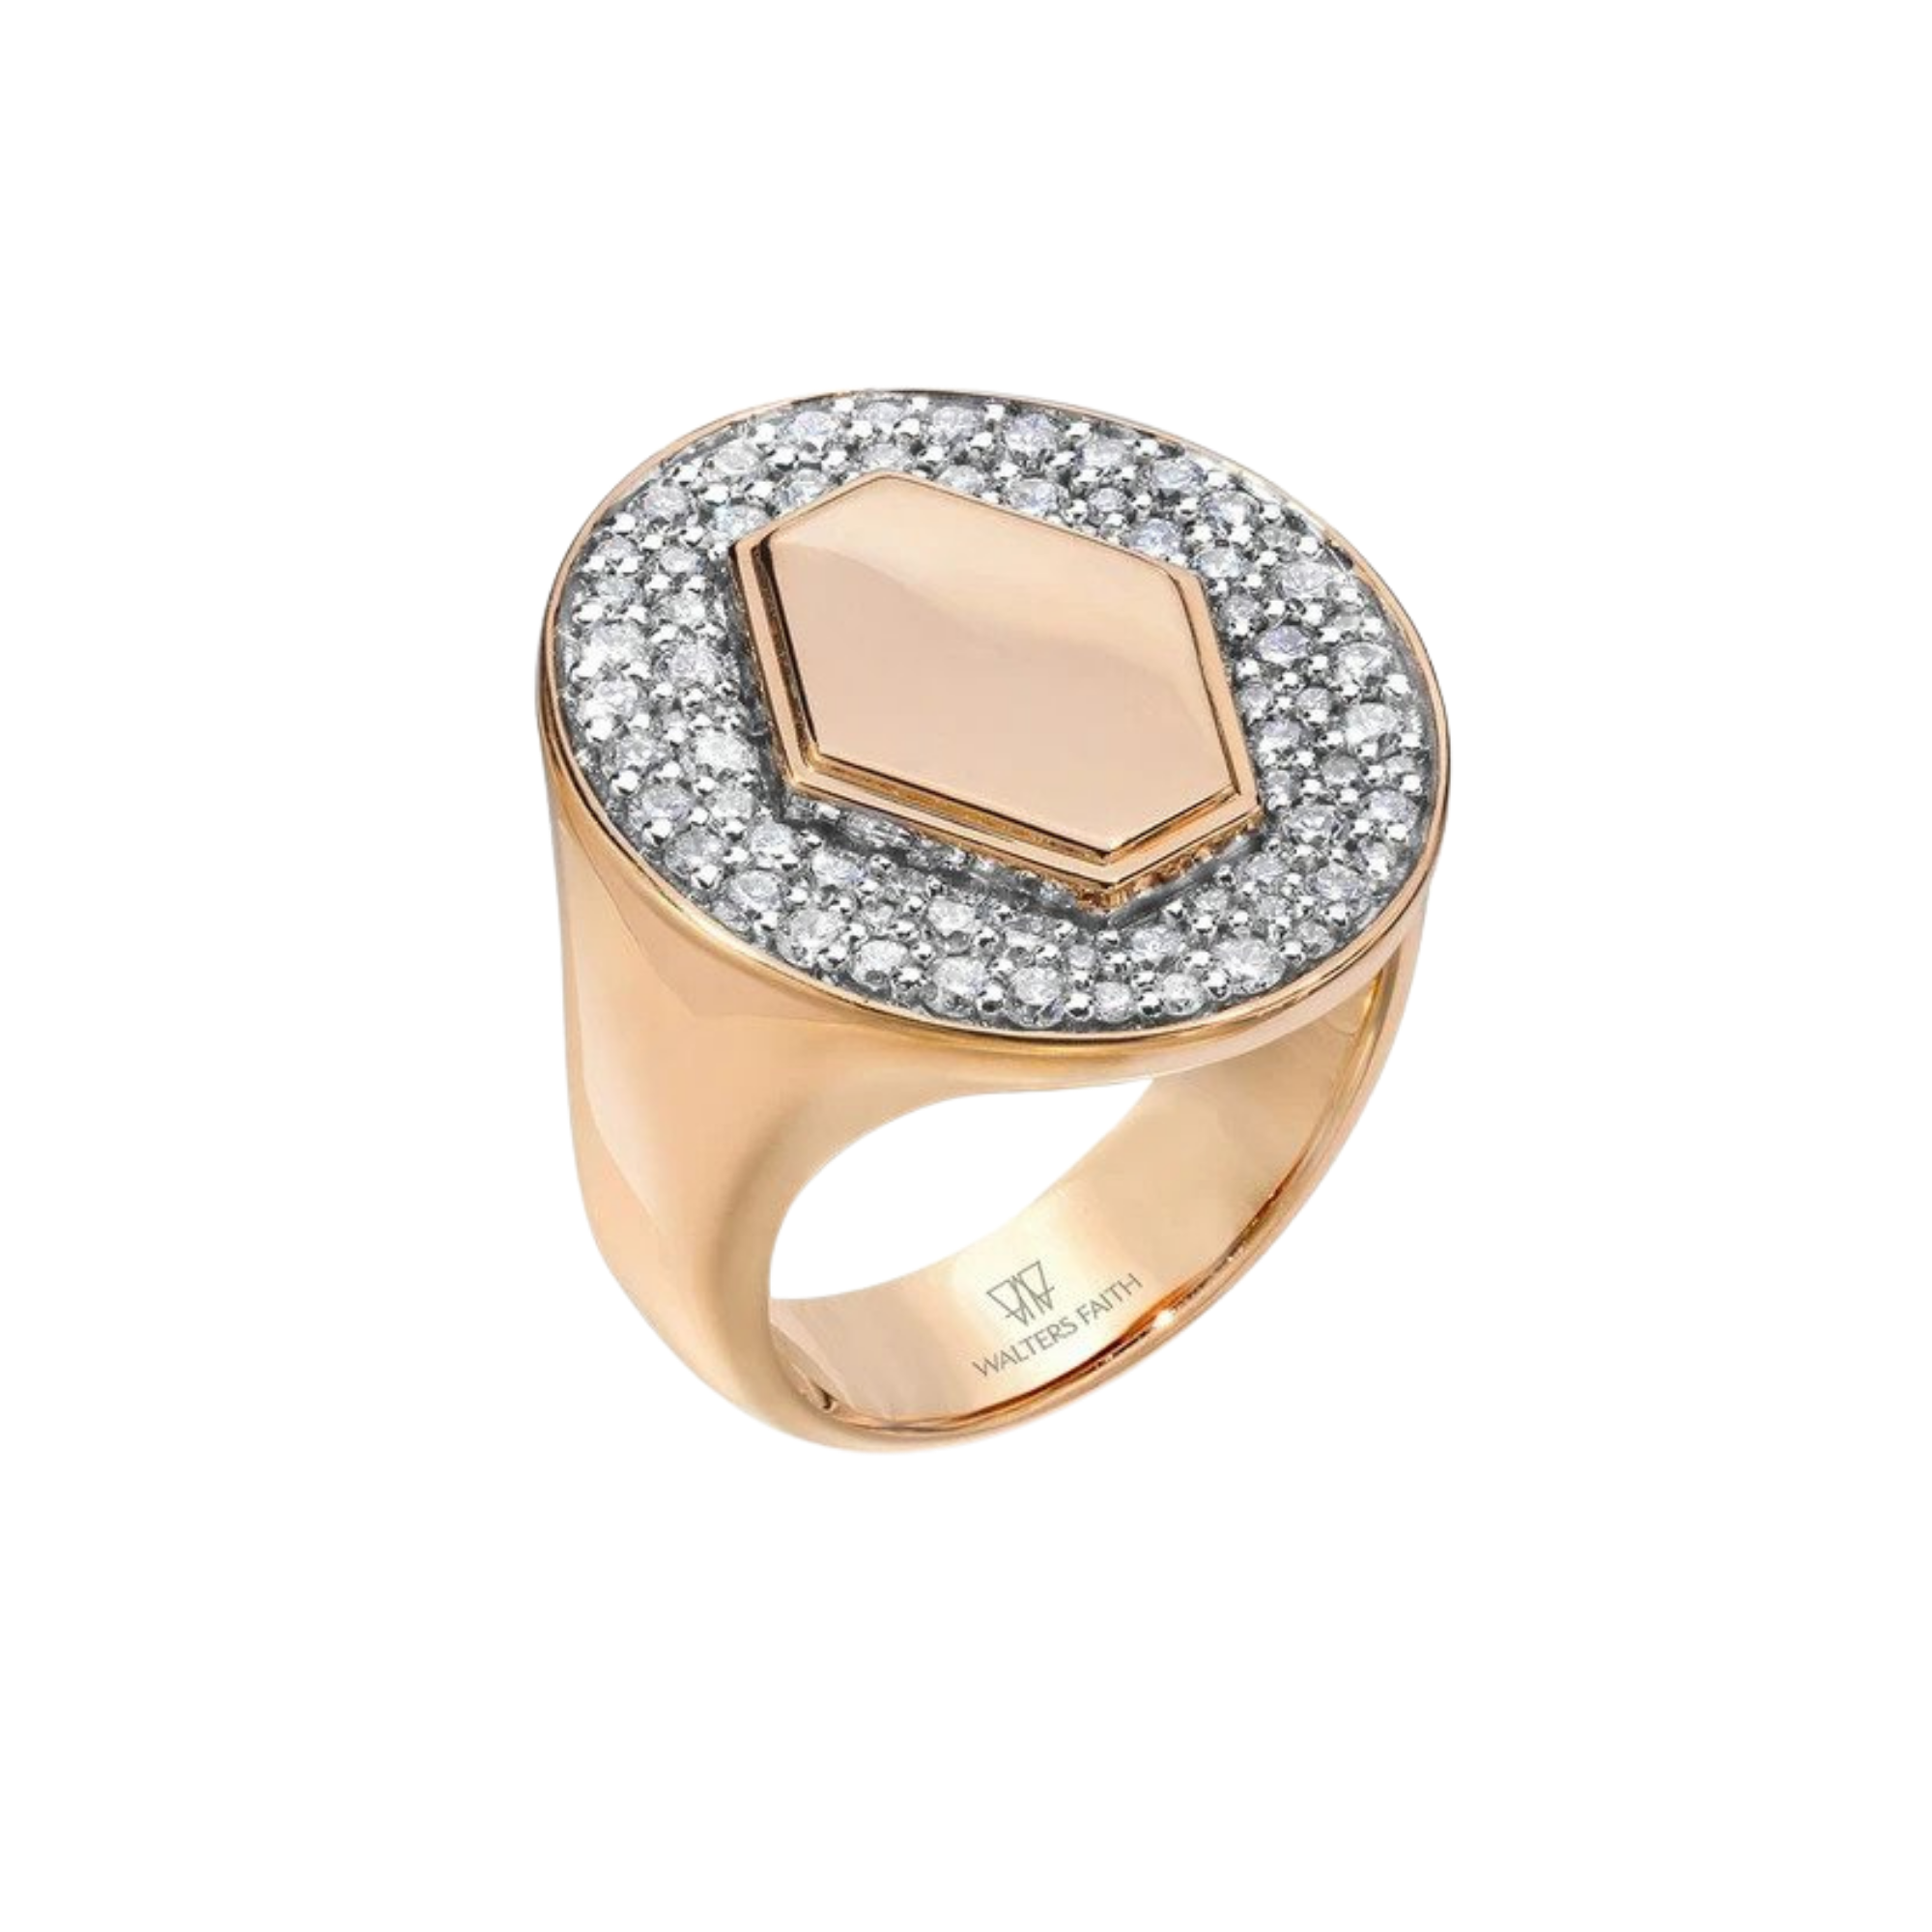 Walters Faith Quentin 18k Rose Gold Diamond Signet Ring, $6,550